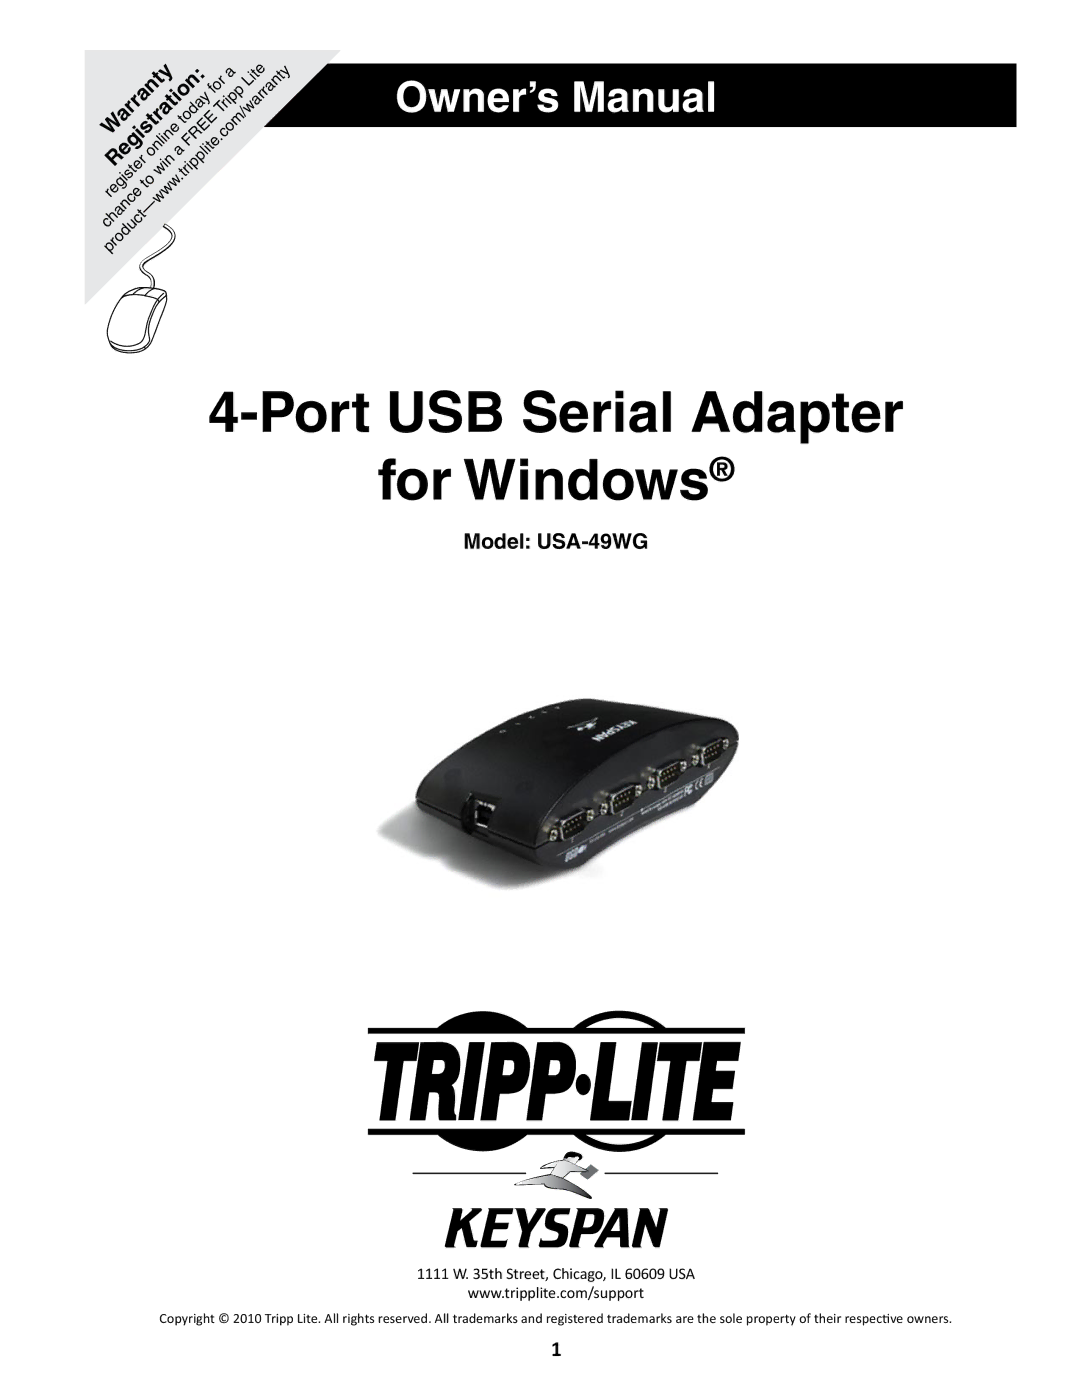 Keyspan USA-49WG owner manual Port USB Serial Adapter For Windows 